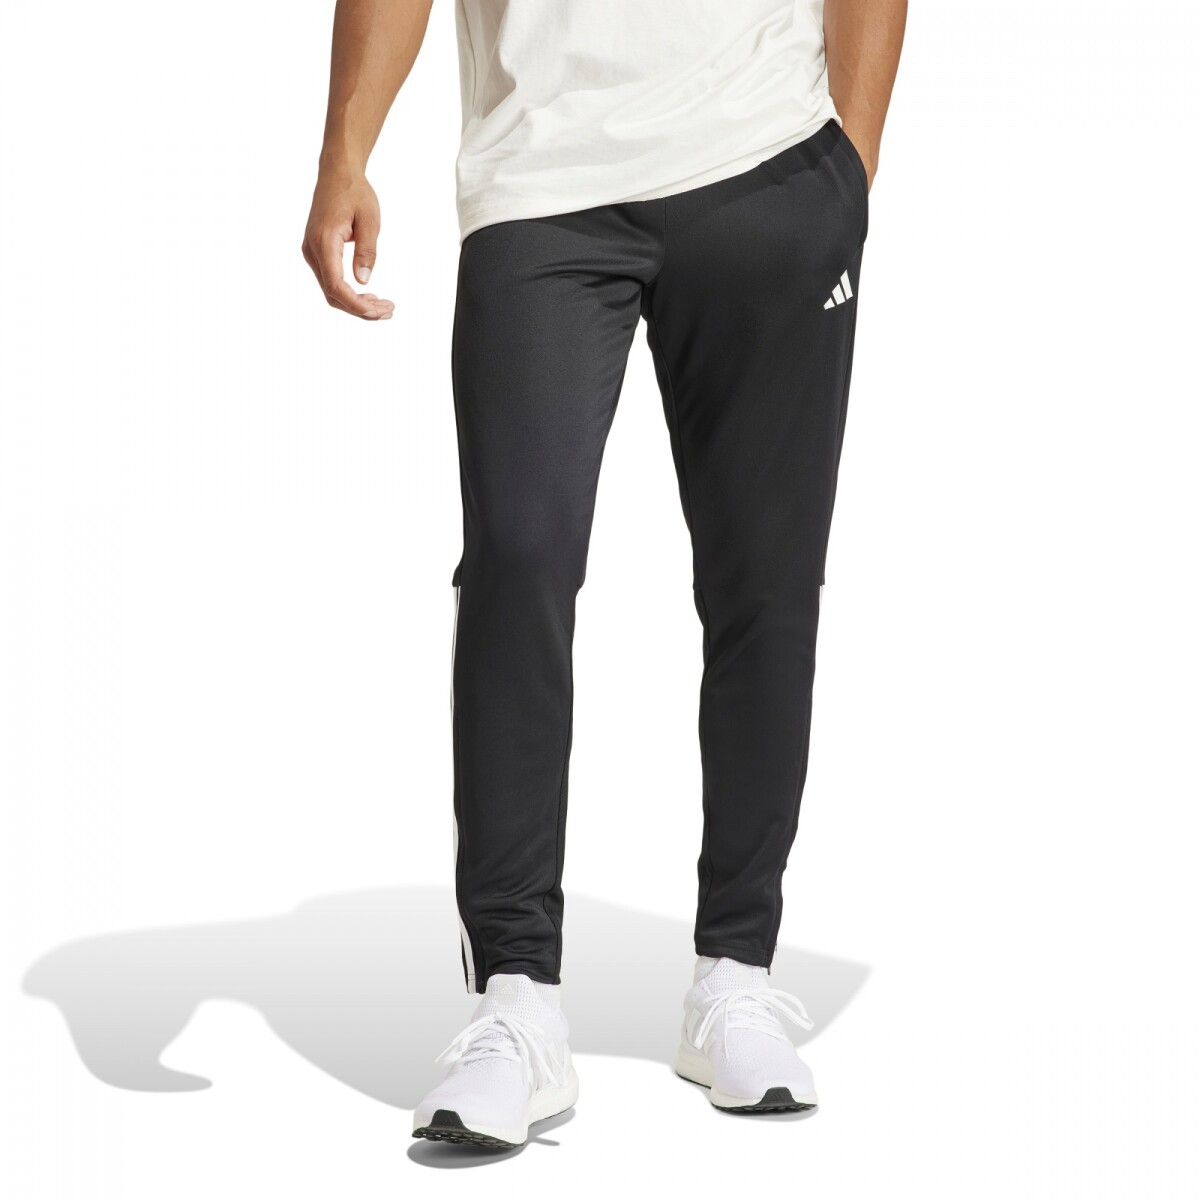 Pantalon Sereno Cut 3 Adidas - Negro/Blanco 